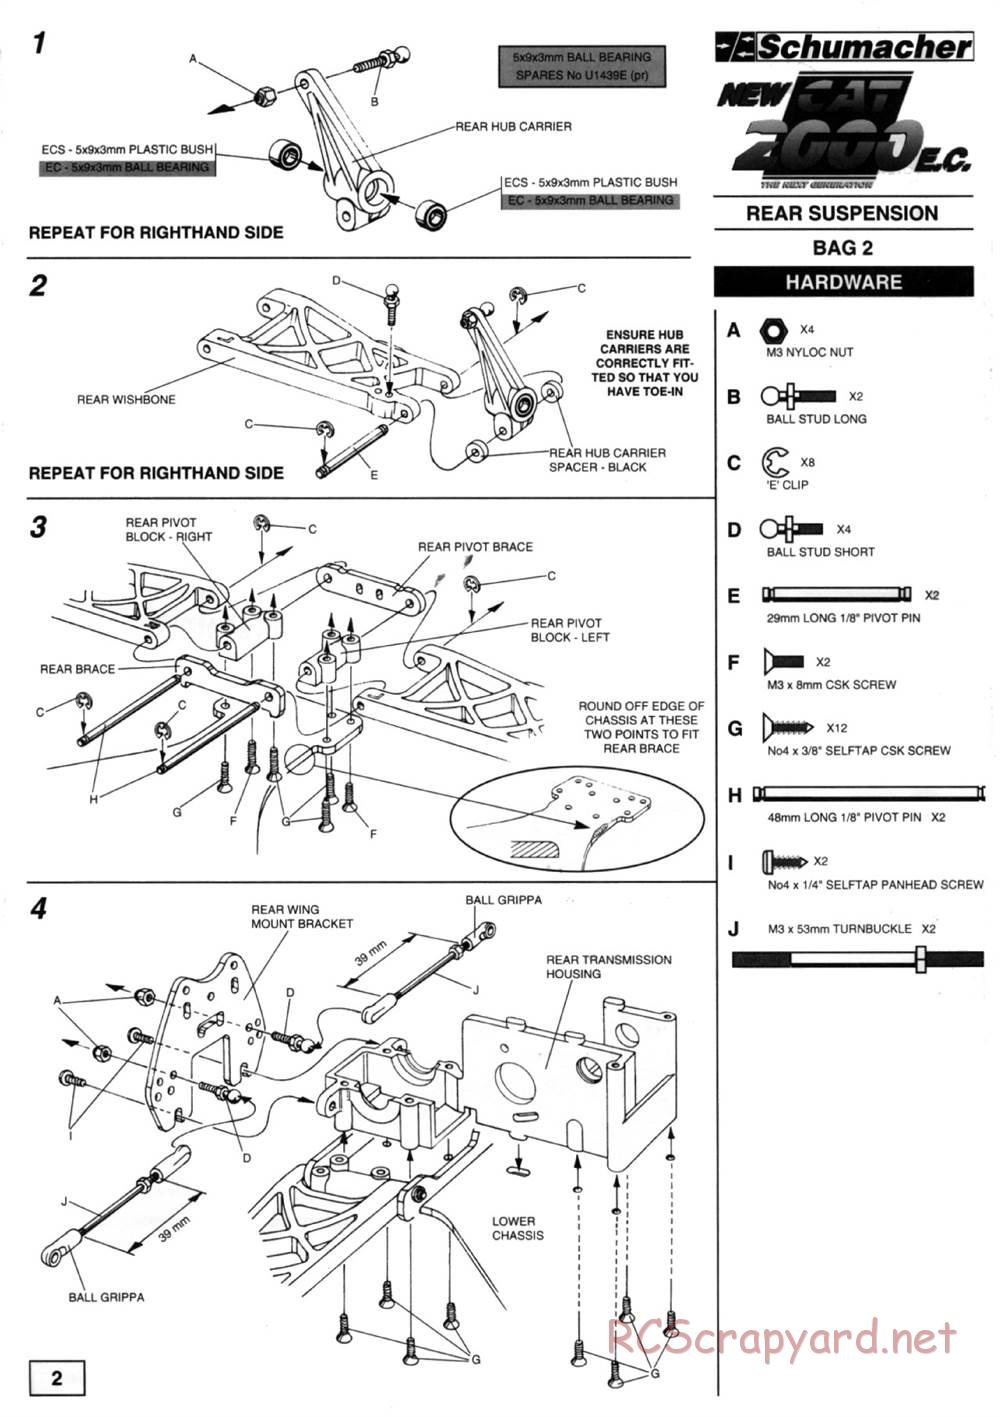 Schumacher - Cat 2000 EC - Manual - Page 4